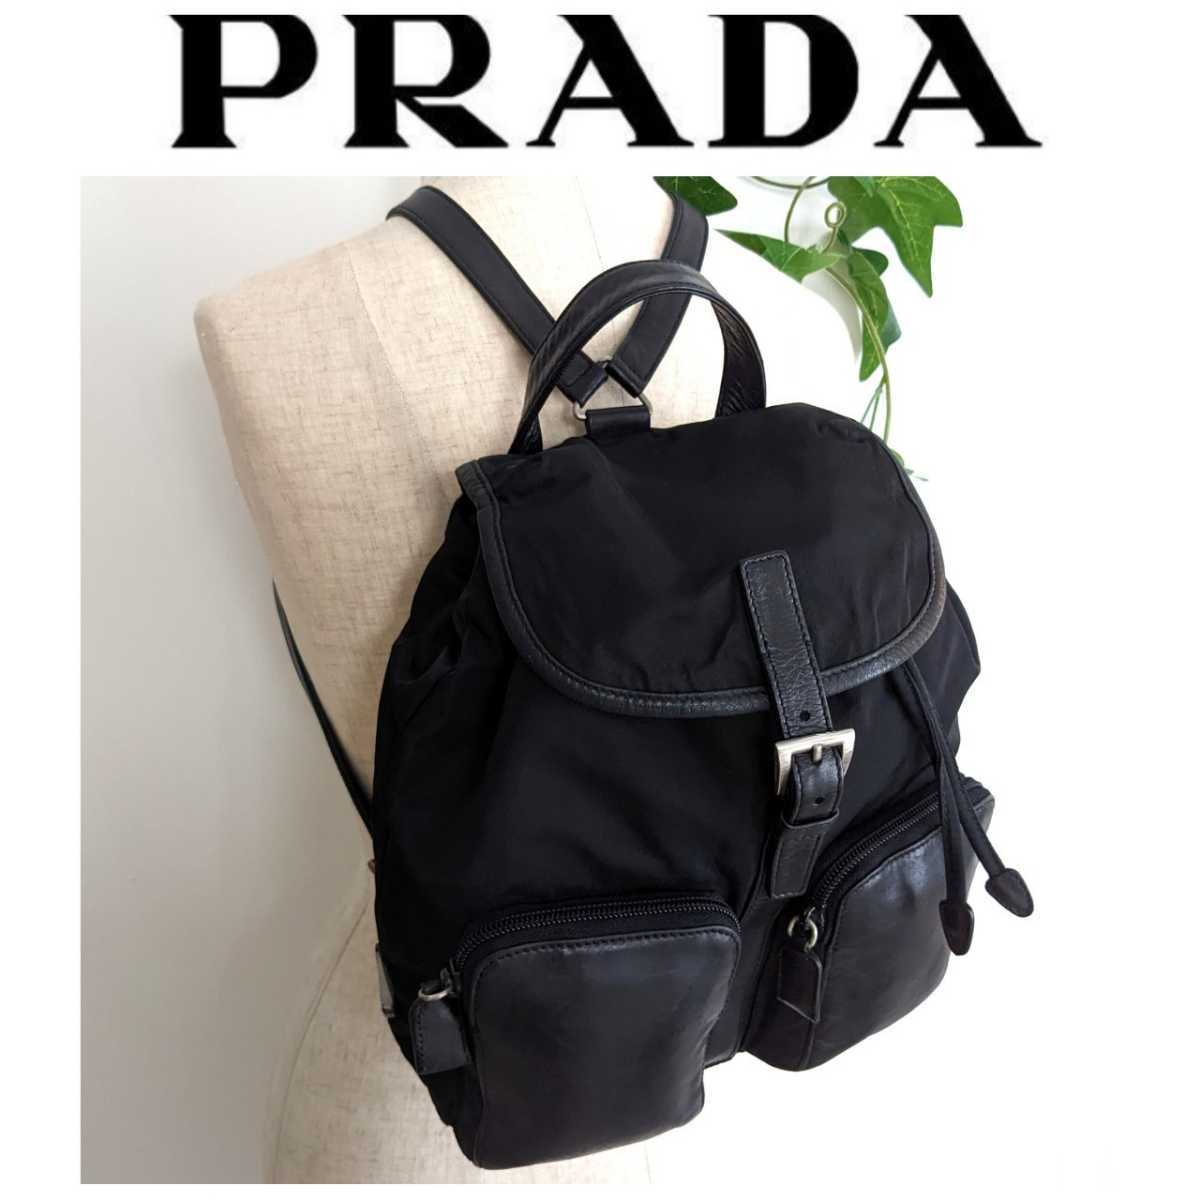 PRADA ナイロン 軽量 リュック 巾着 バックパック 黒 レディース メンズ-